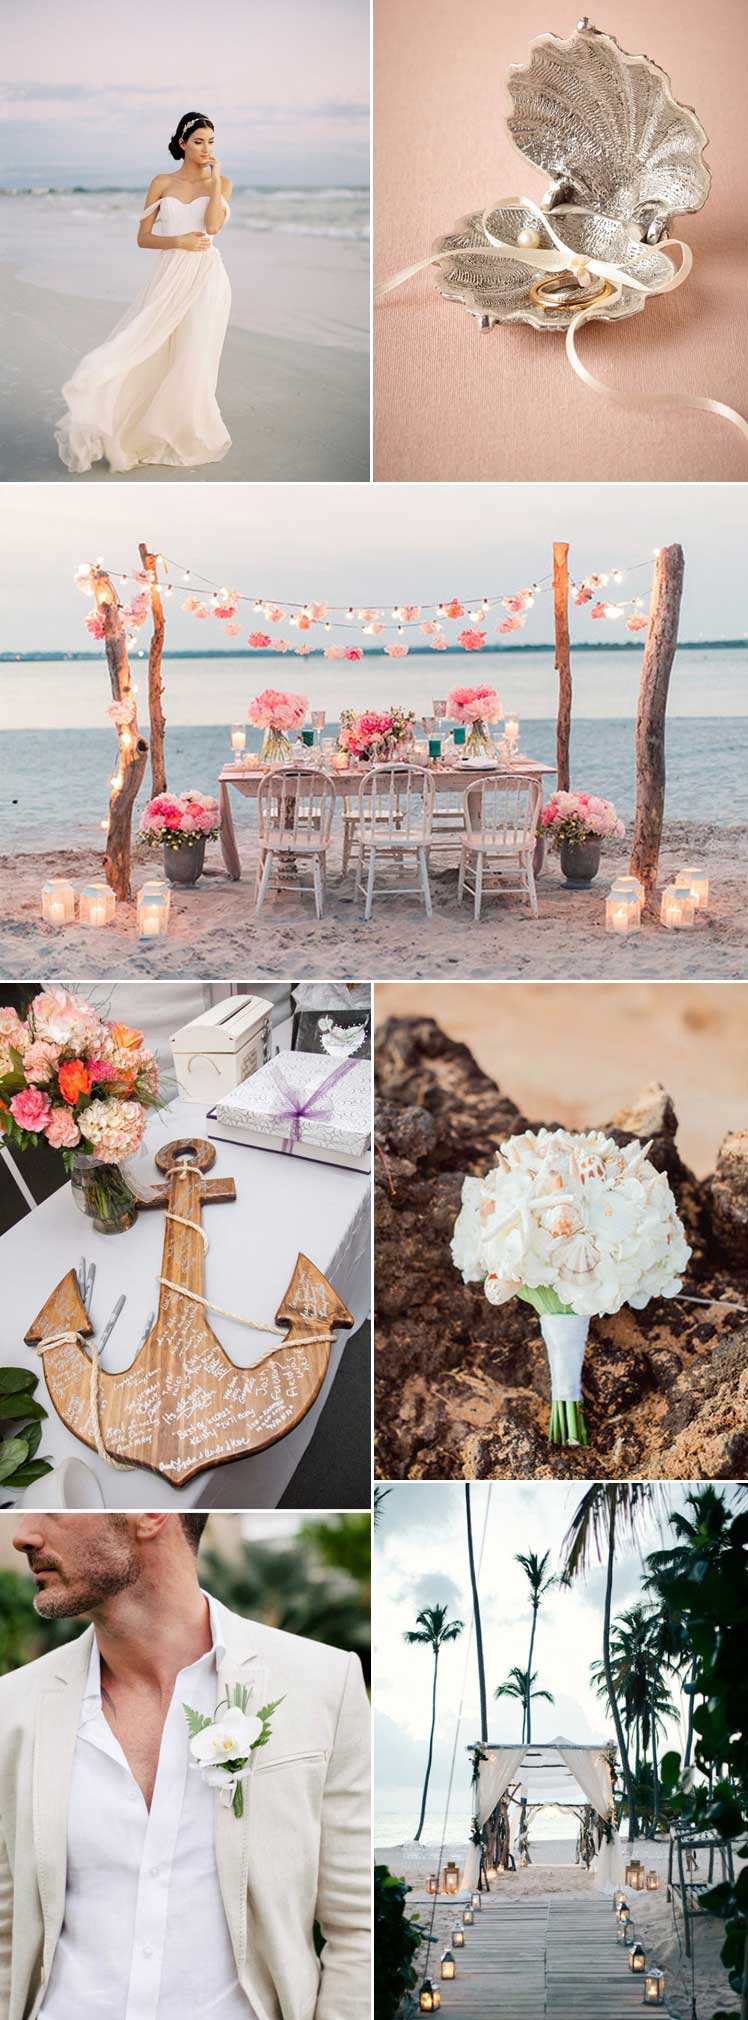 Romantic beach wedding ideas